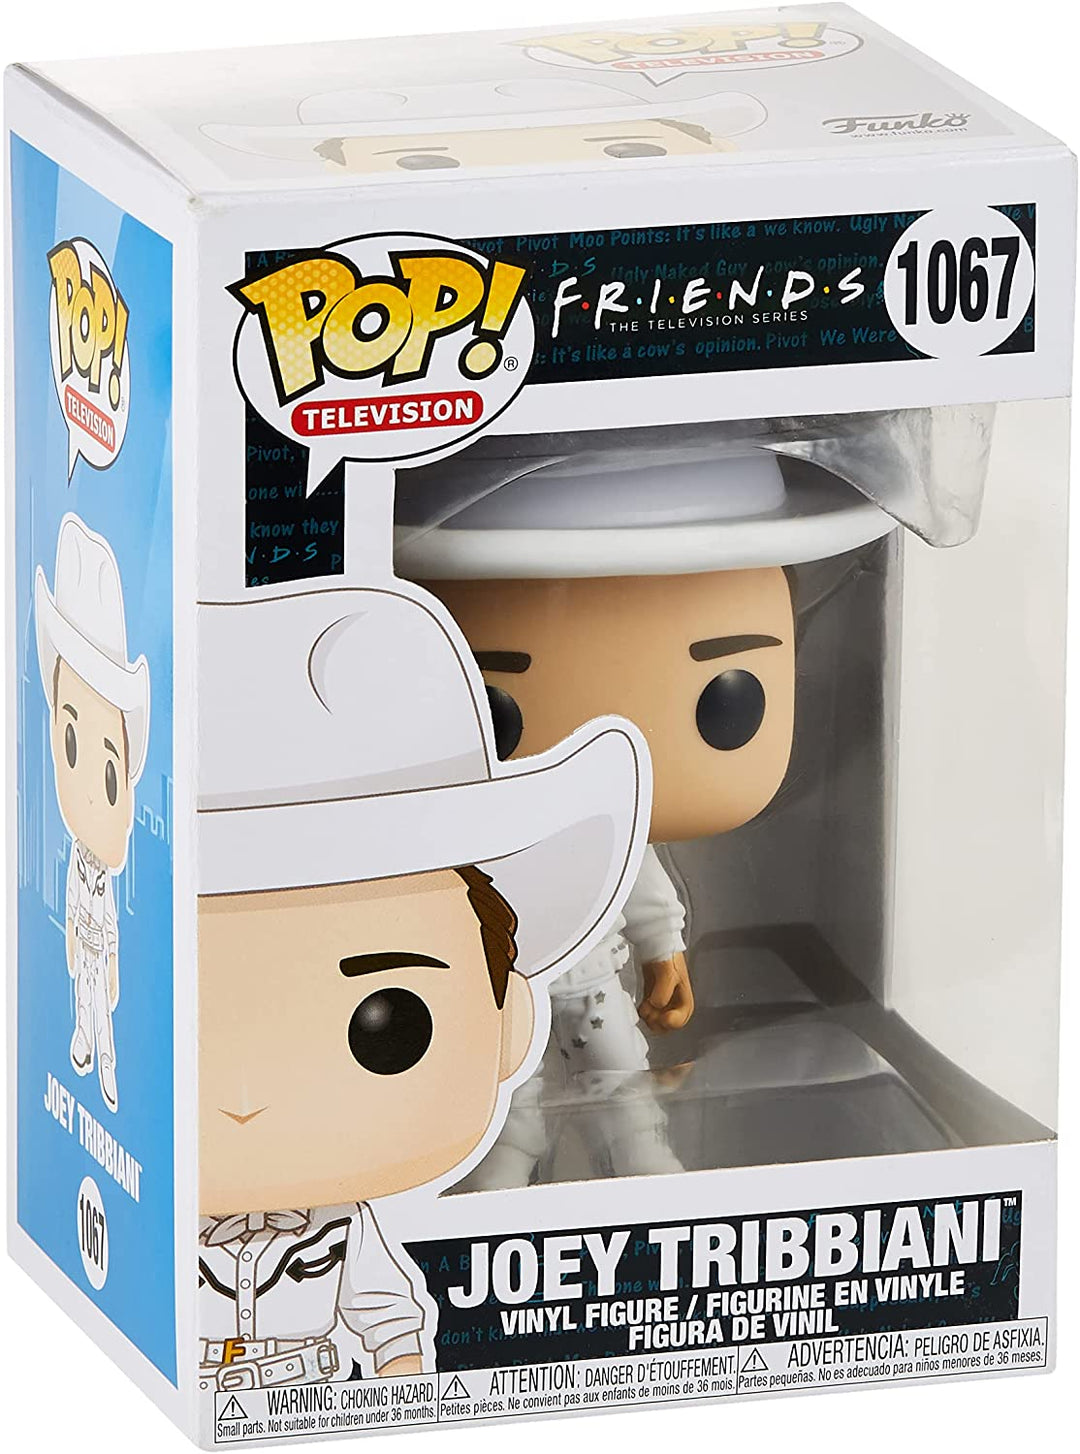 Vrienden De televisieserie Joey Tribbiani Funko 41953 Pop! Vinyl #1067